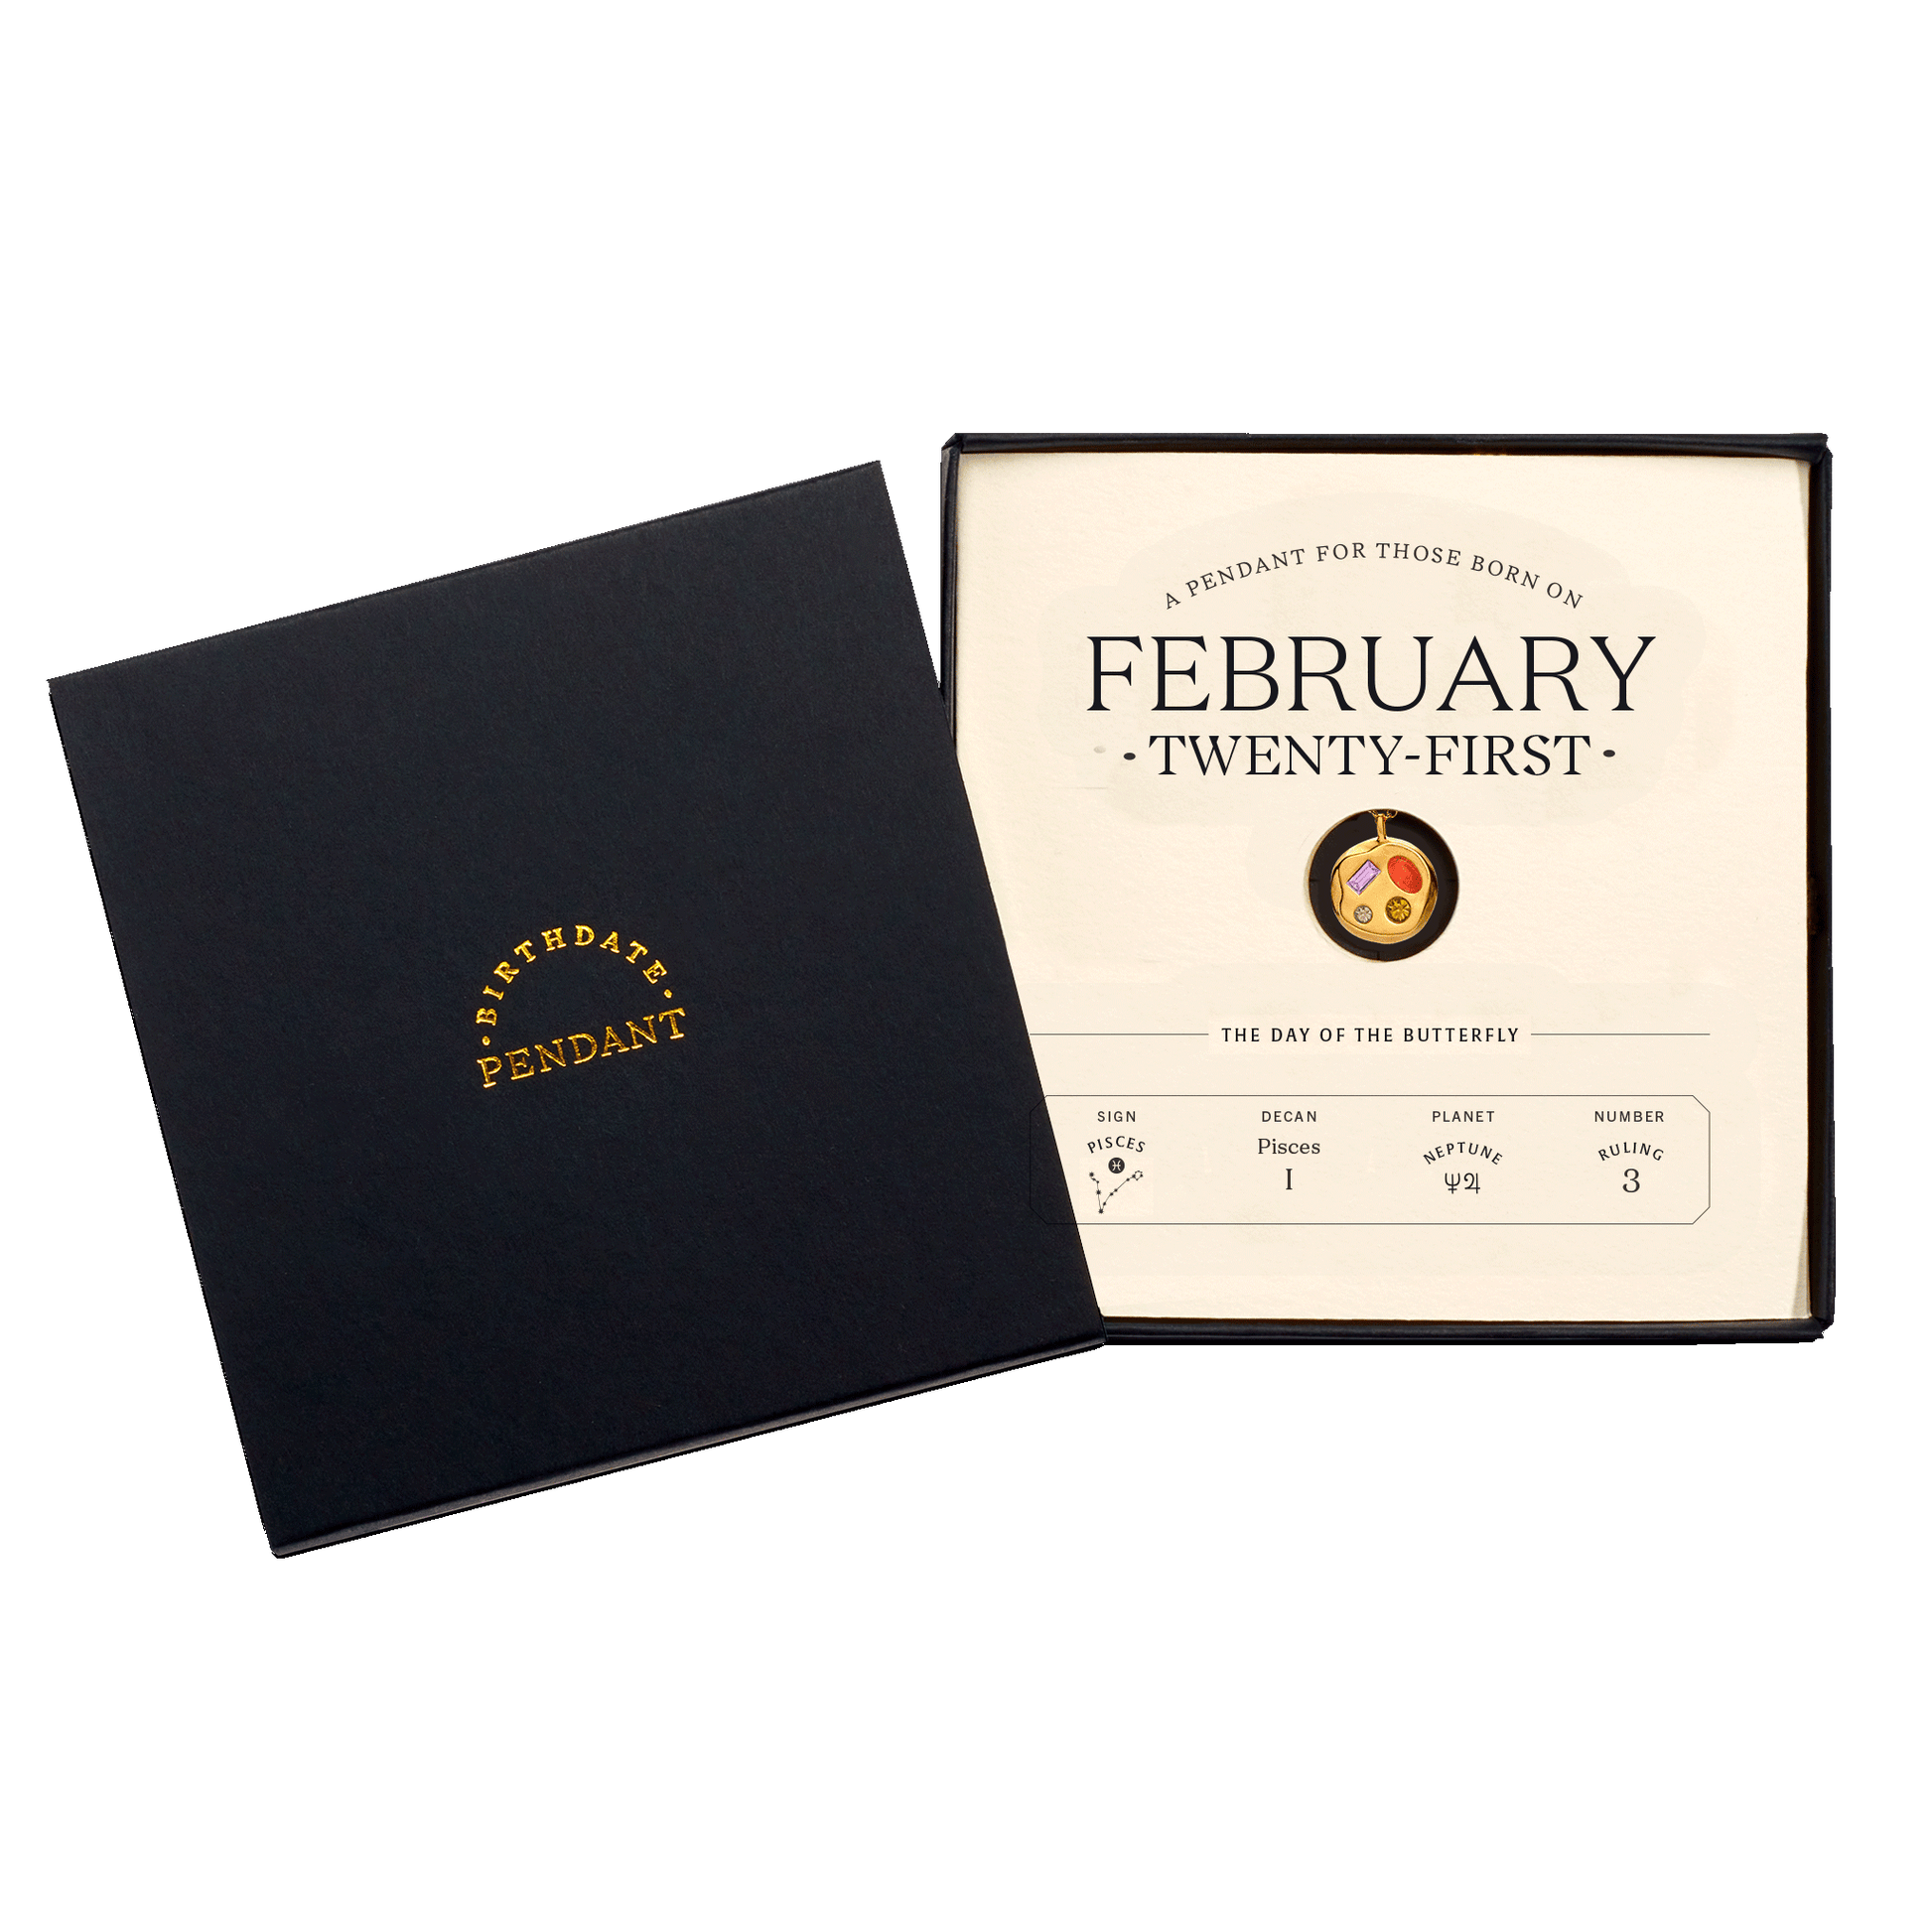 The February Twenty-First Pendant inside its box